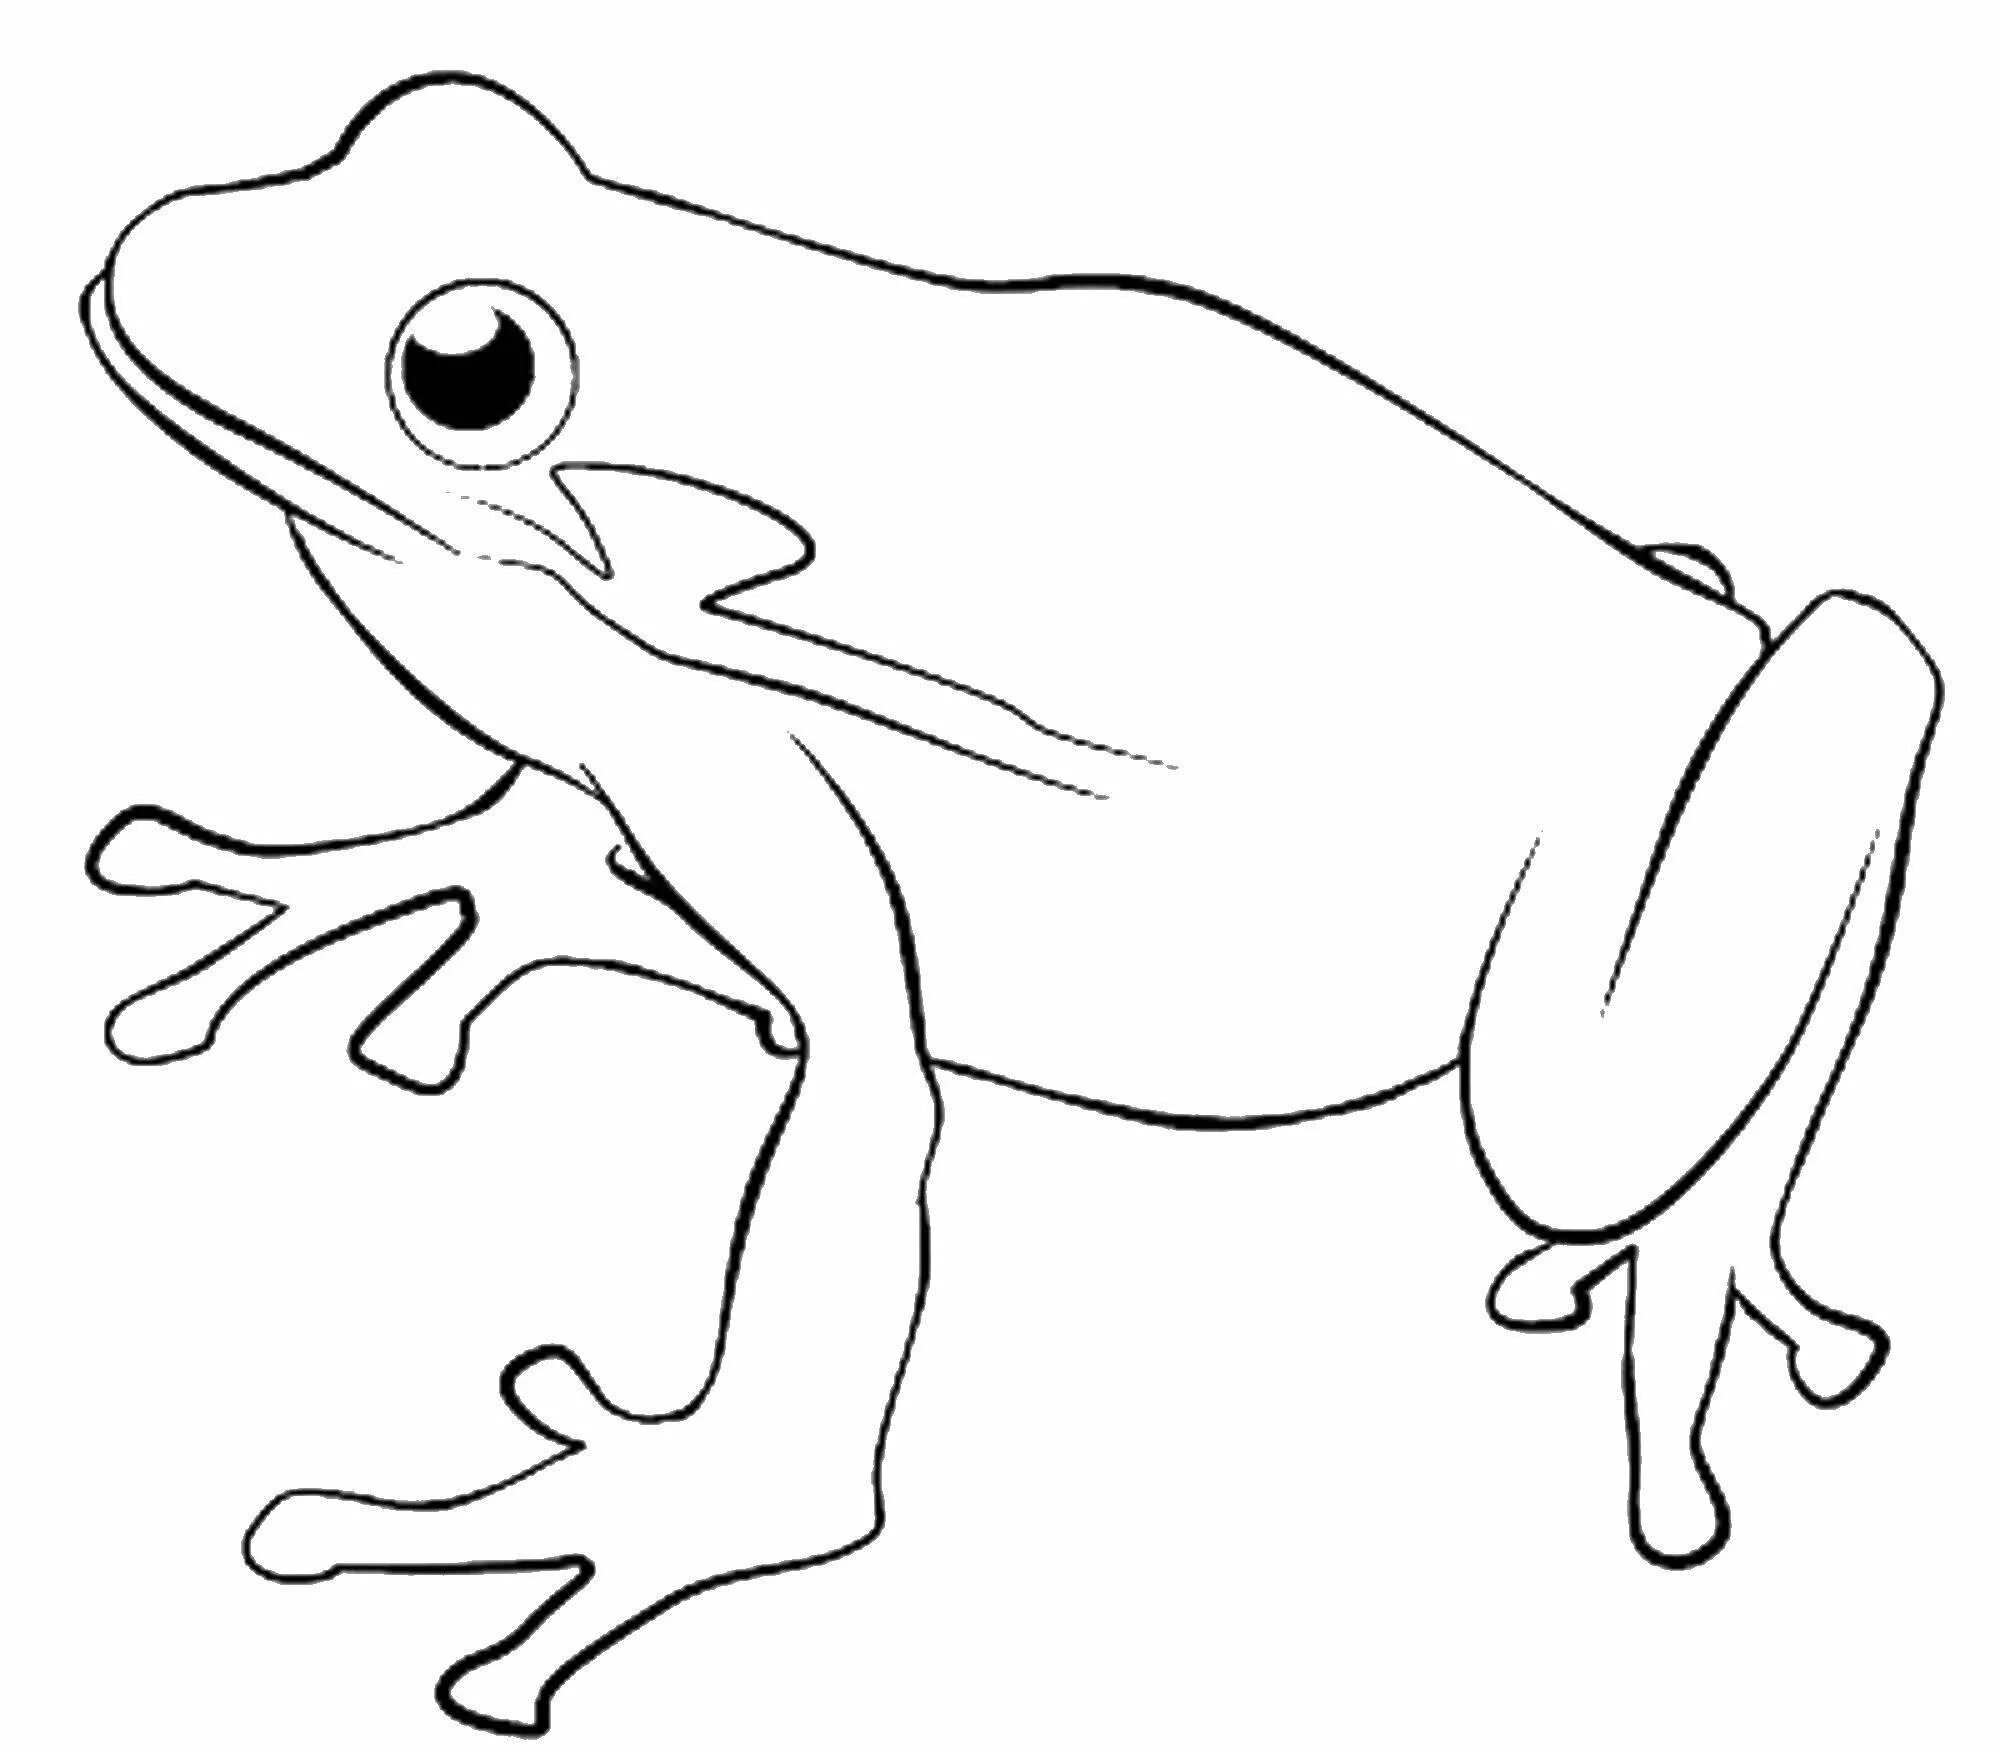 Frog#3